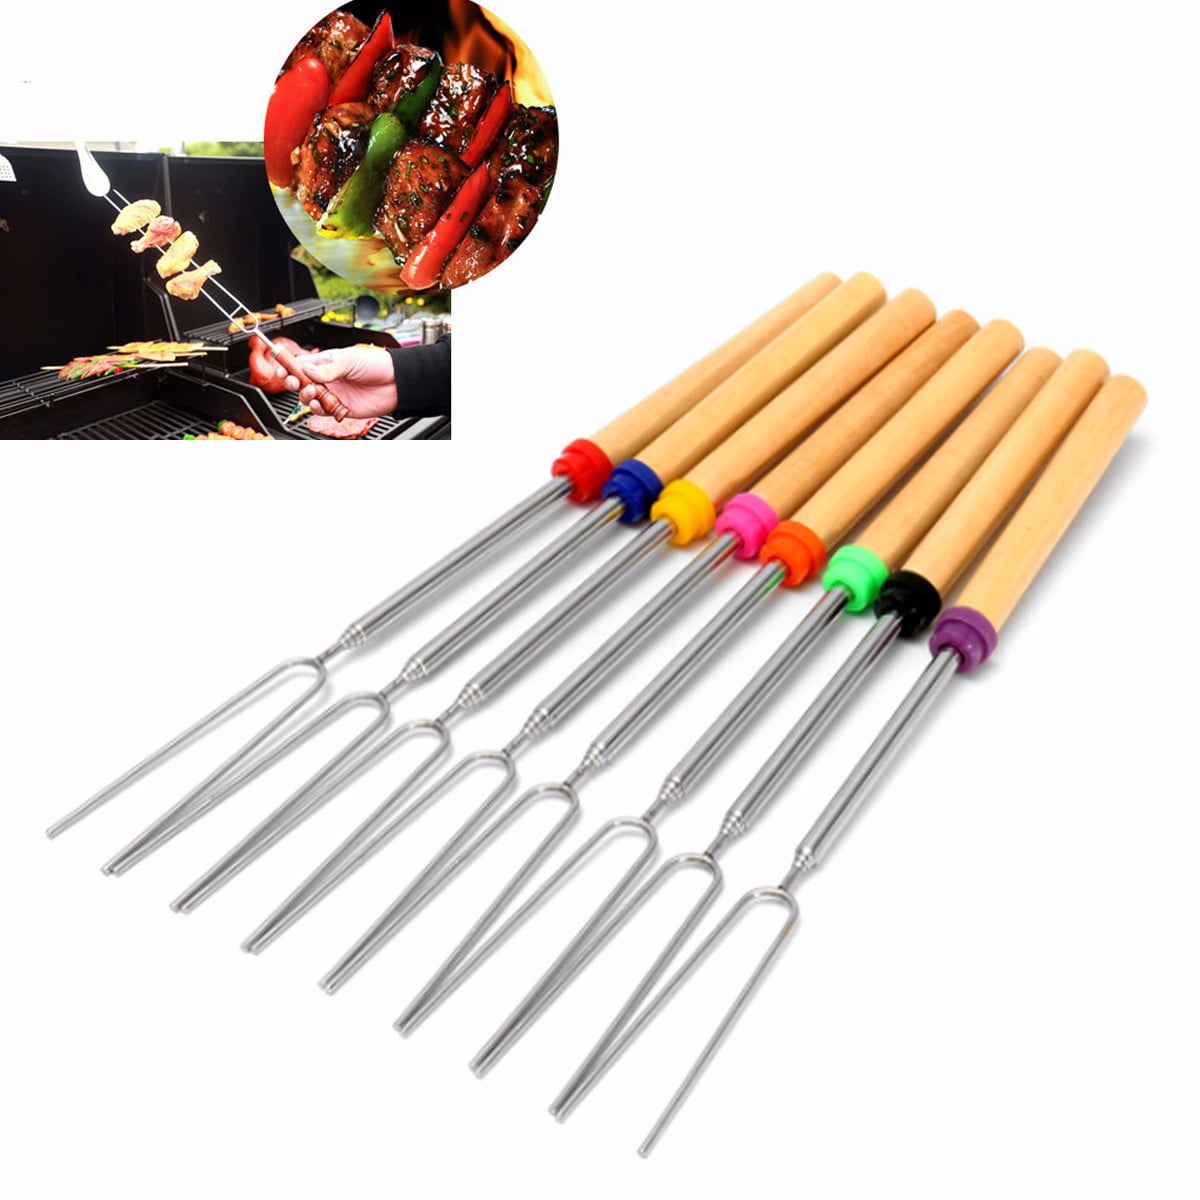 Telescoping Marshmallow Roasting Sticks Set of 8 Hot Dog Forks & Smores